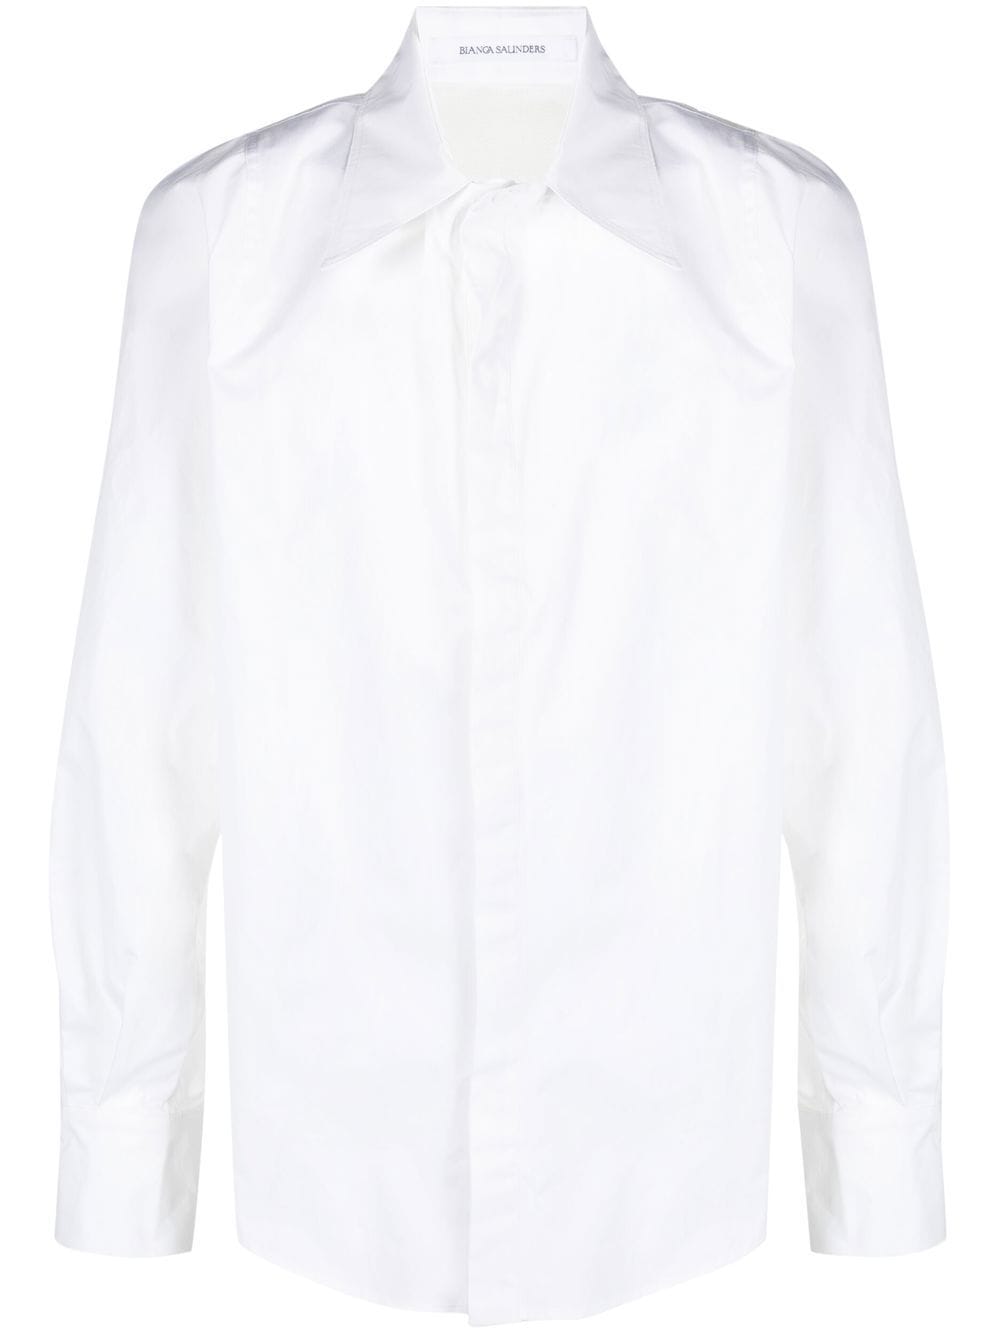 bianca saunders chemise à col pointu - blanc